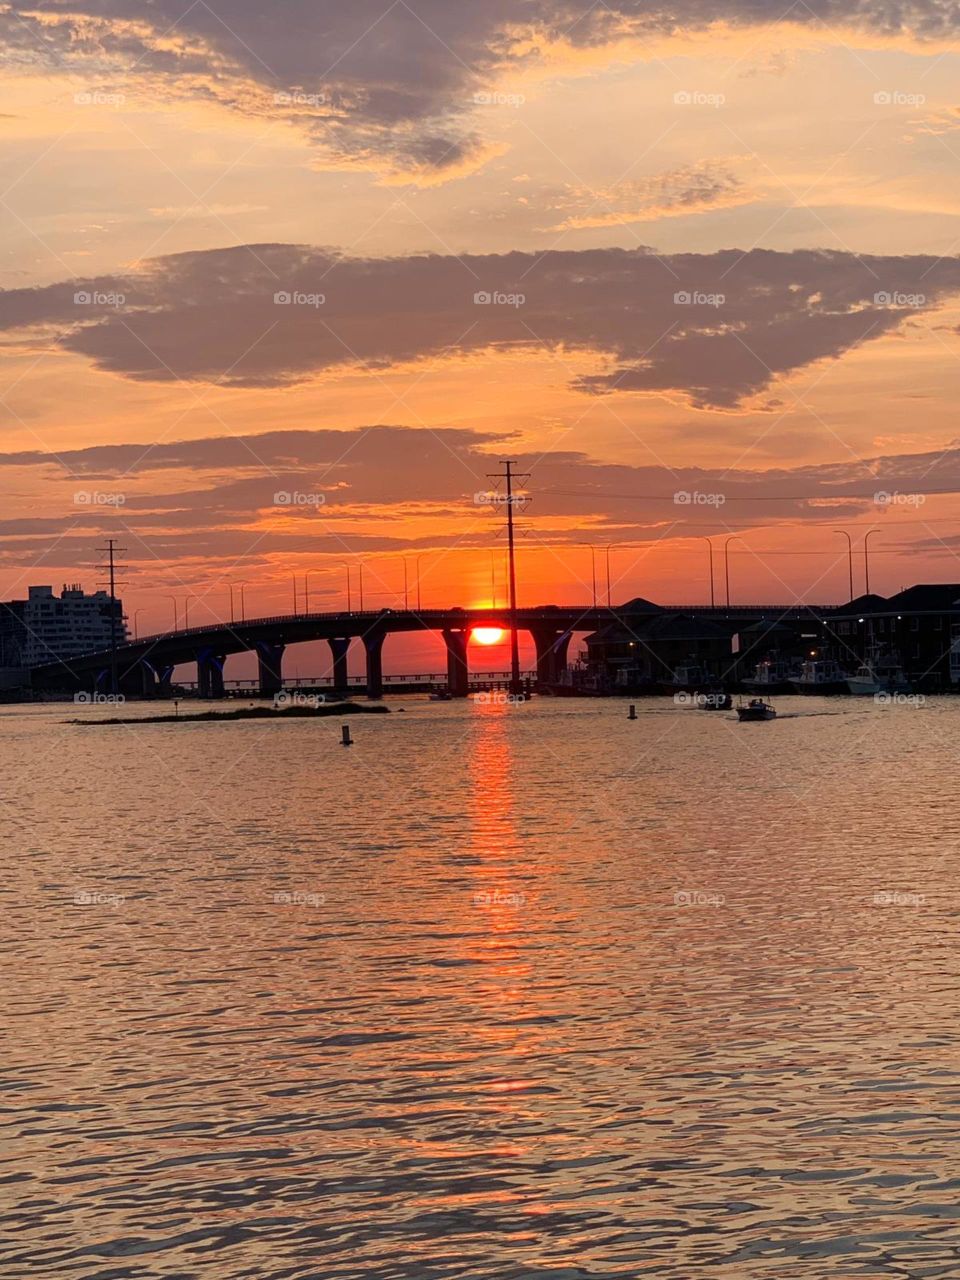 Sunset on the Chesapeake Bay